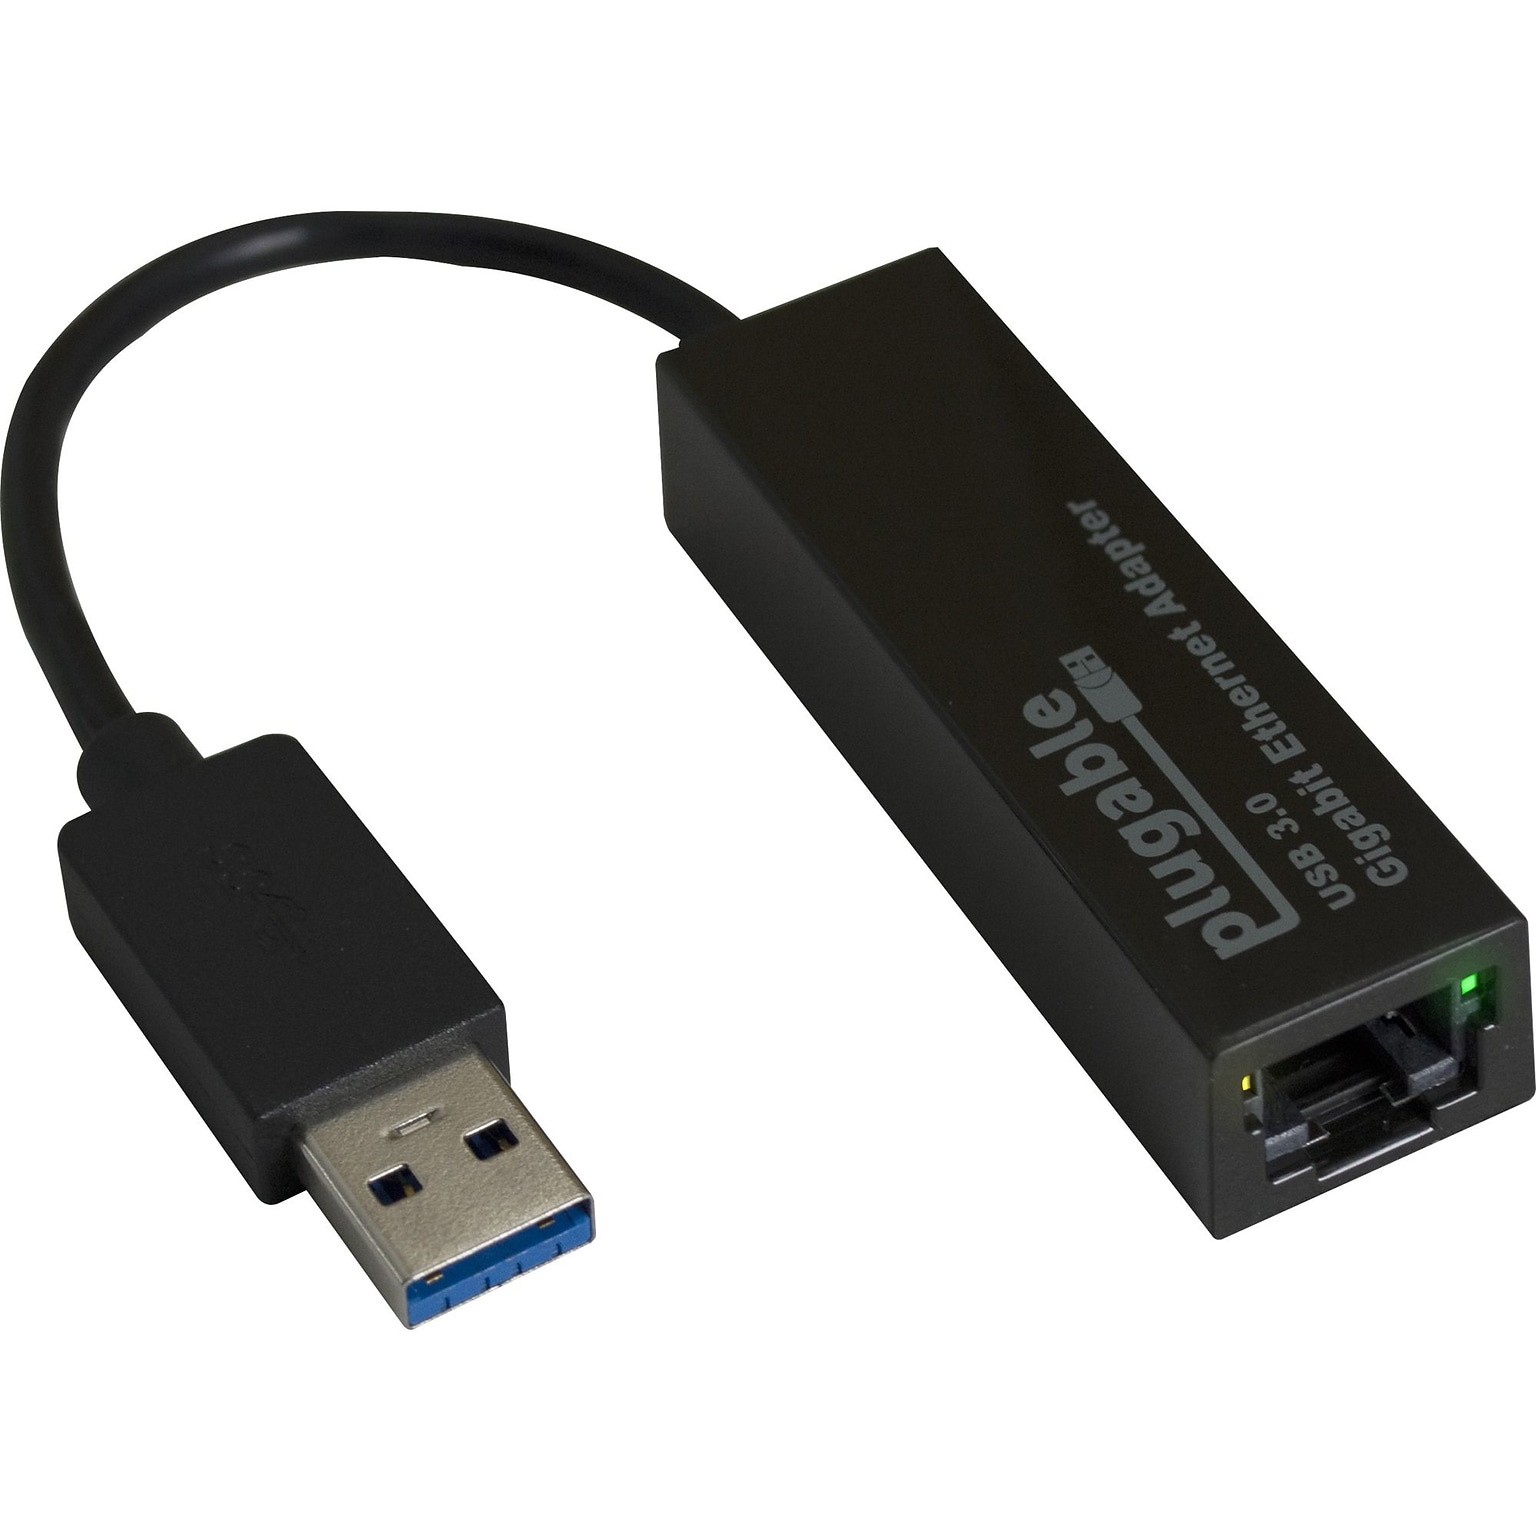 Plugable USB3-E1000 USB 3.0 Gigabit Ethernet LAN Network Adapter for Computer/Notebook